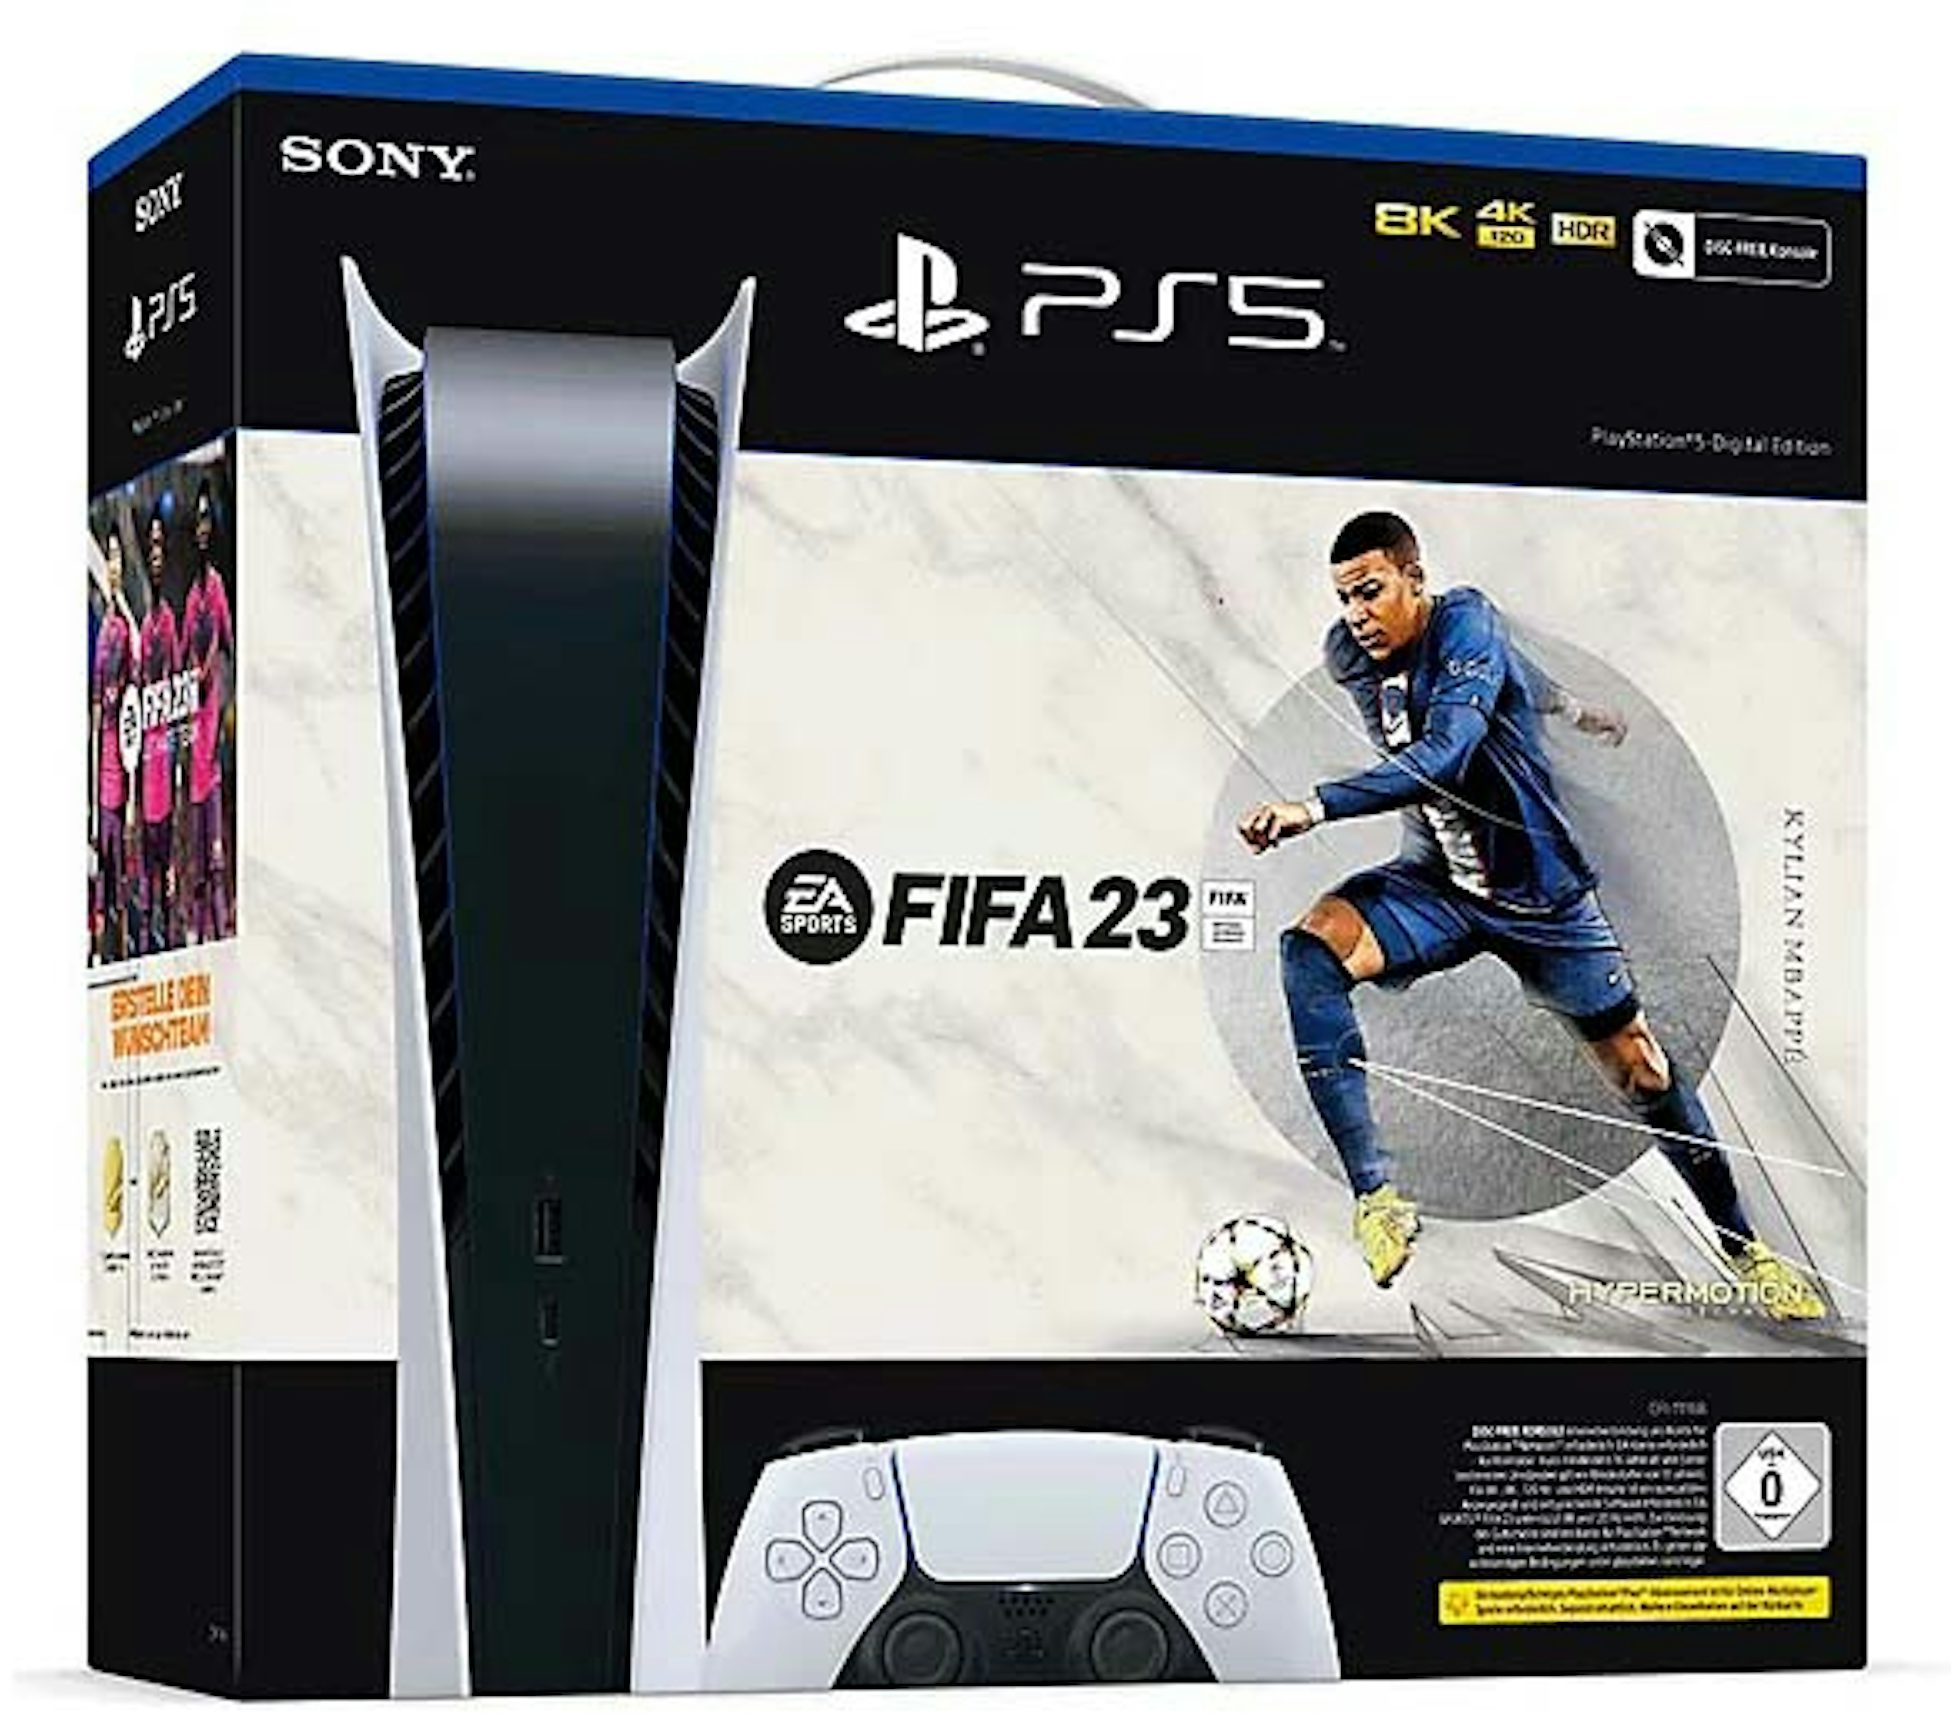 EA SPORTS FUT 23 – 5.900 FIFA Points PS4 e PS5 - Código Digital